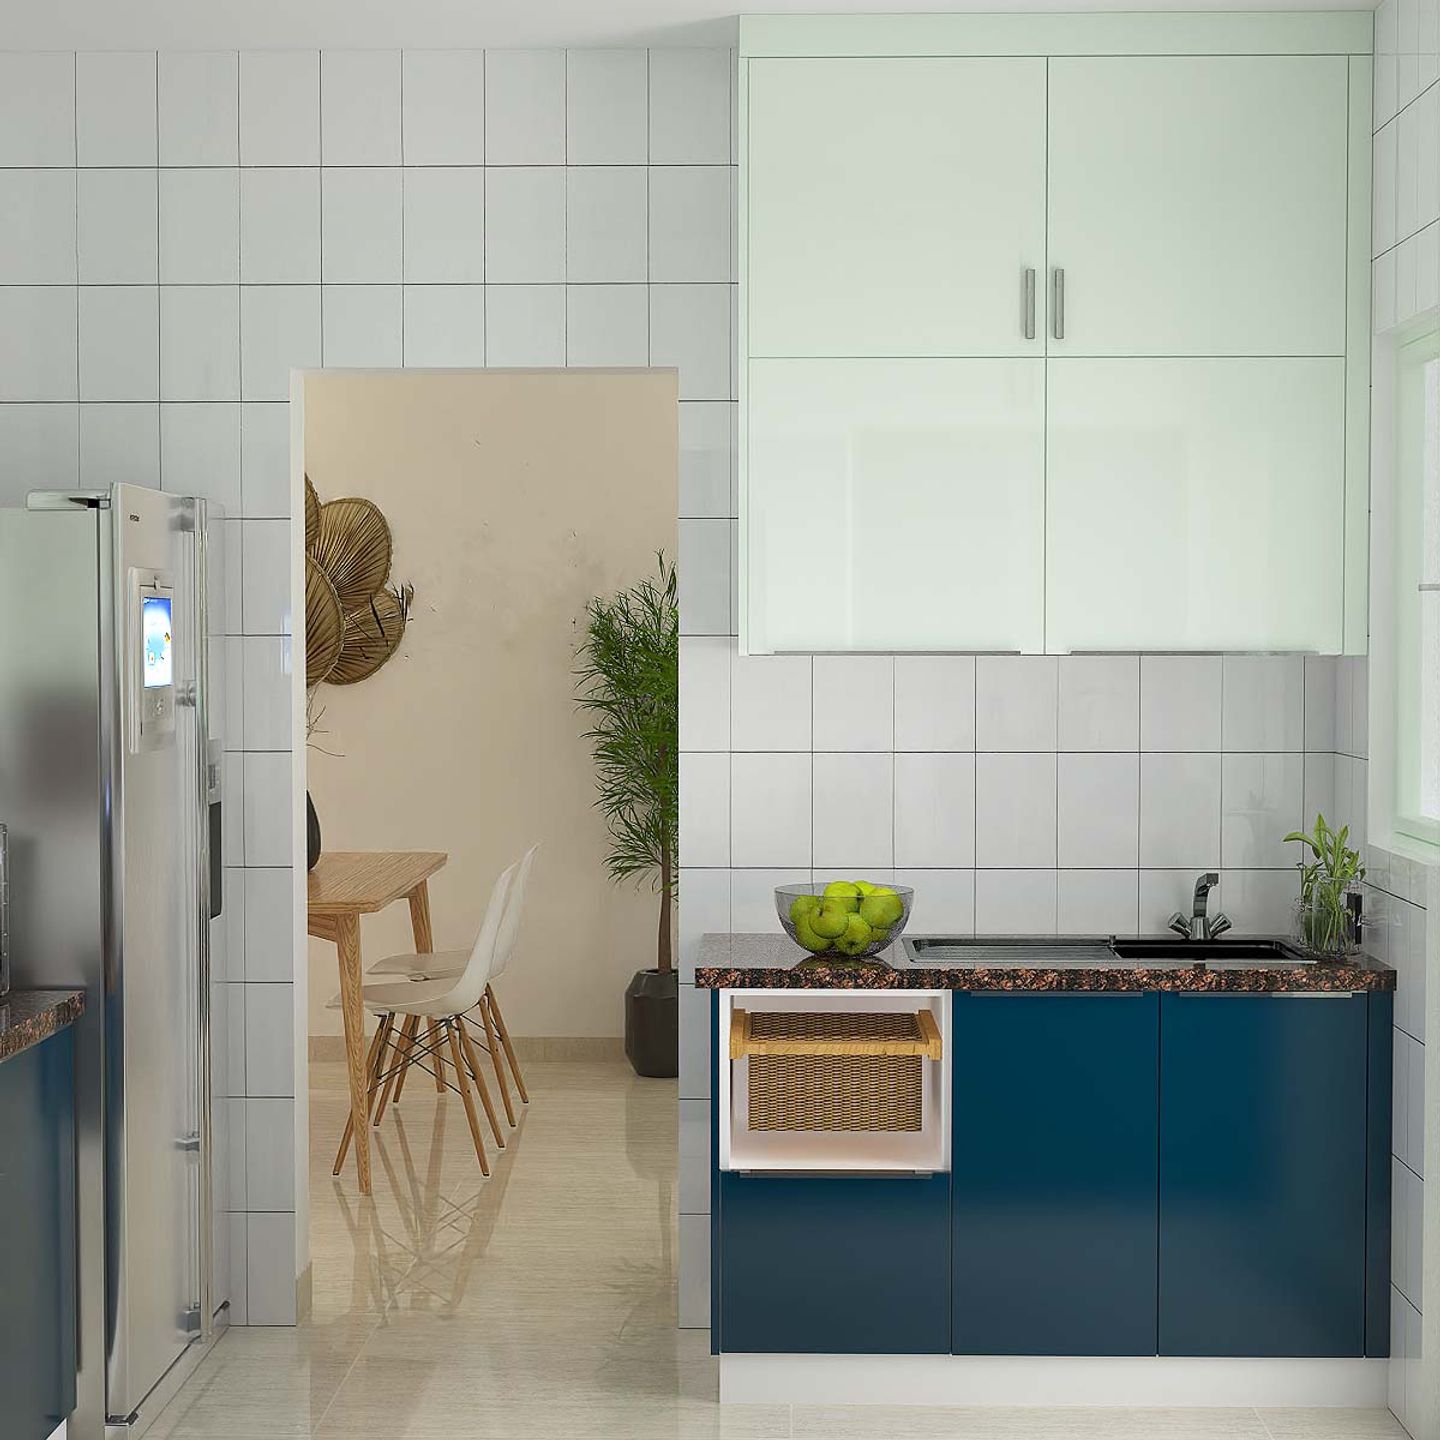 Contemporary Kitchen Cabinet Design In Pastel Shades